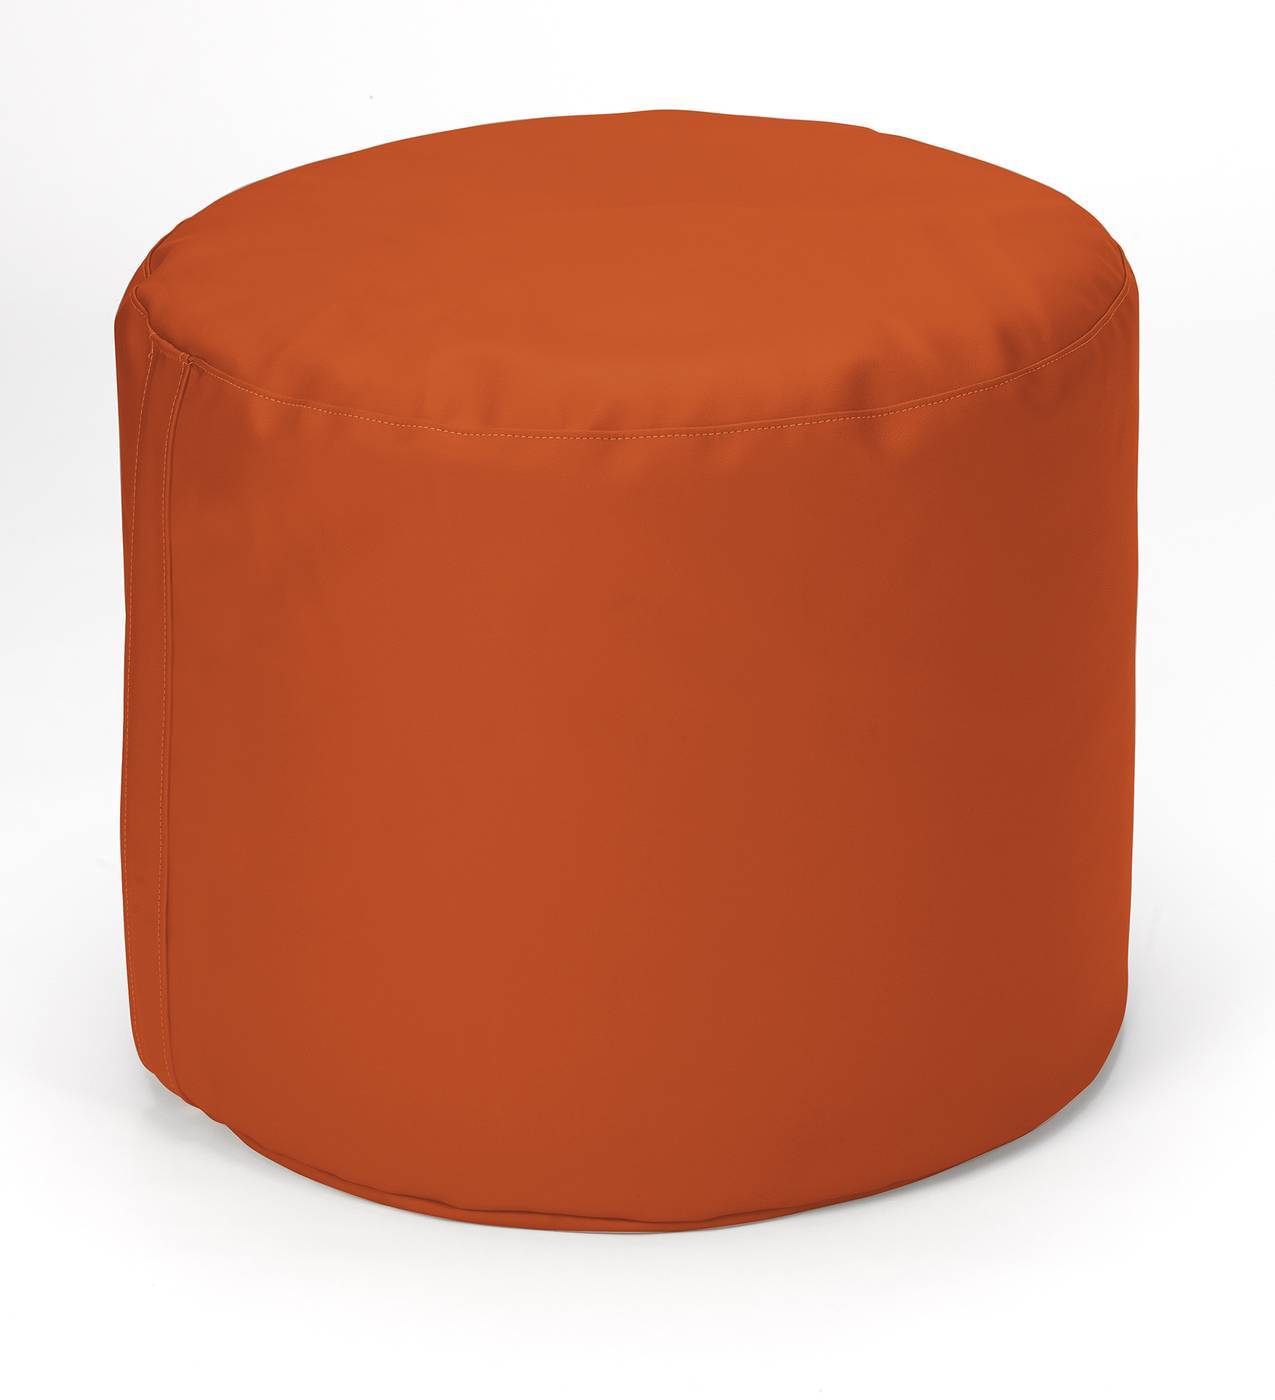 Pouf redondo para habitación juvenil, tapizado en polipiel de alta calidad color naranja